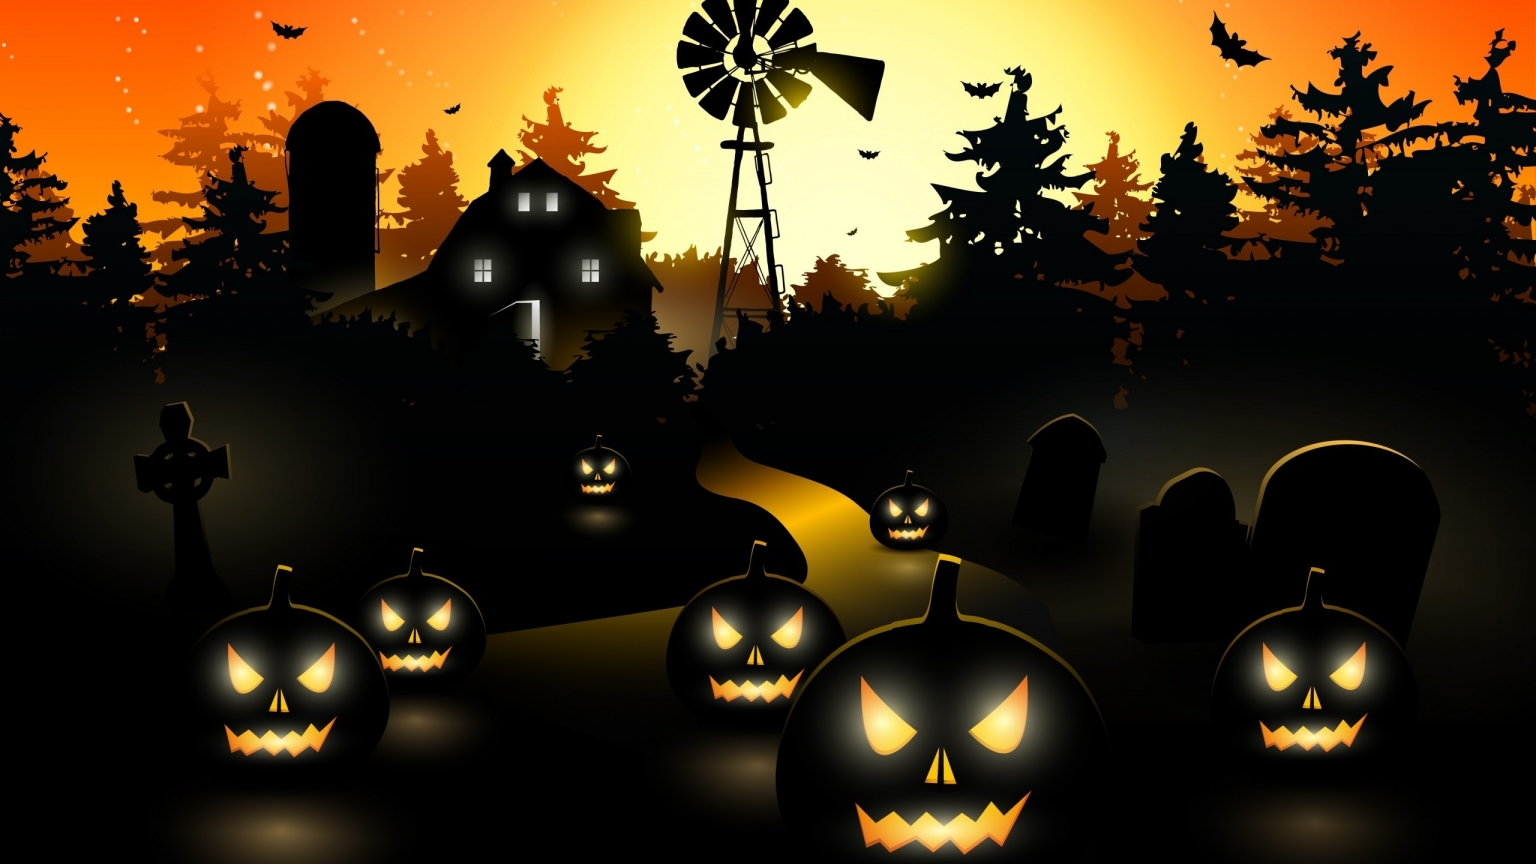 Halloween Black Pumpkins for 1536 x 864 HDTV resolution